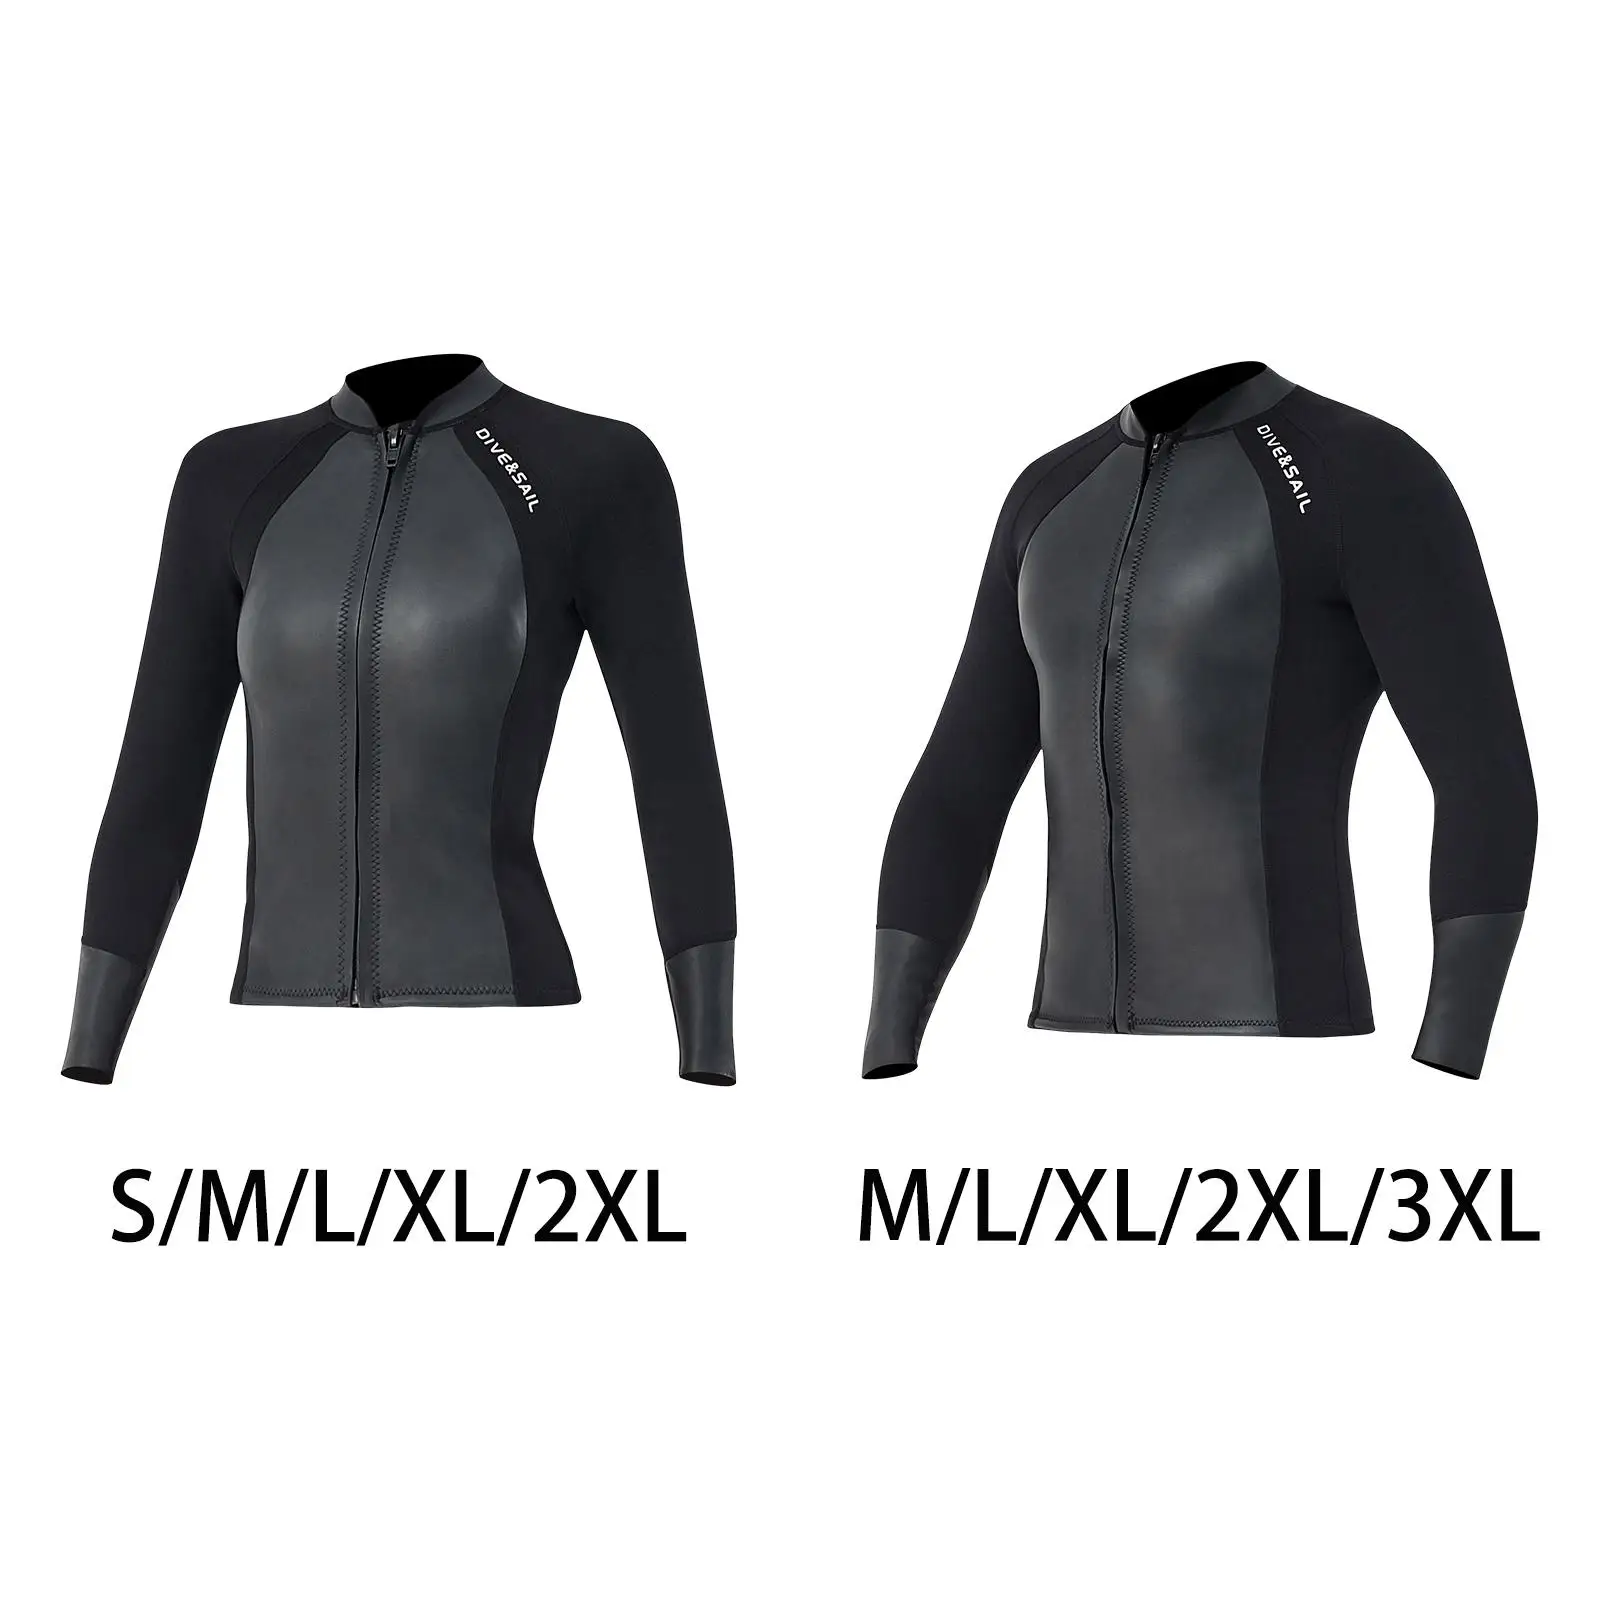 Neoprene 2mm Wetsuit Top Diving Suit Front Zipper Wetsuits Jacket Keep Warm Long Sleeve Dive Suit for Snorkeling Canoeing